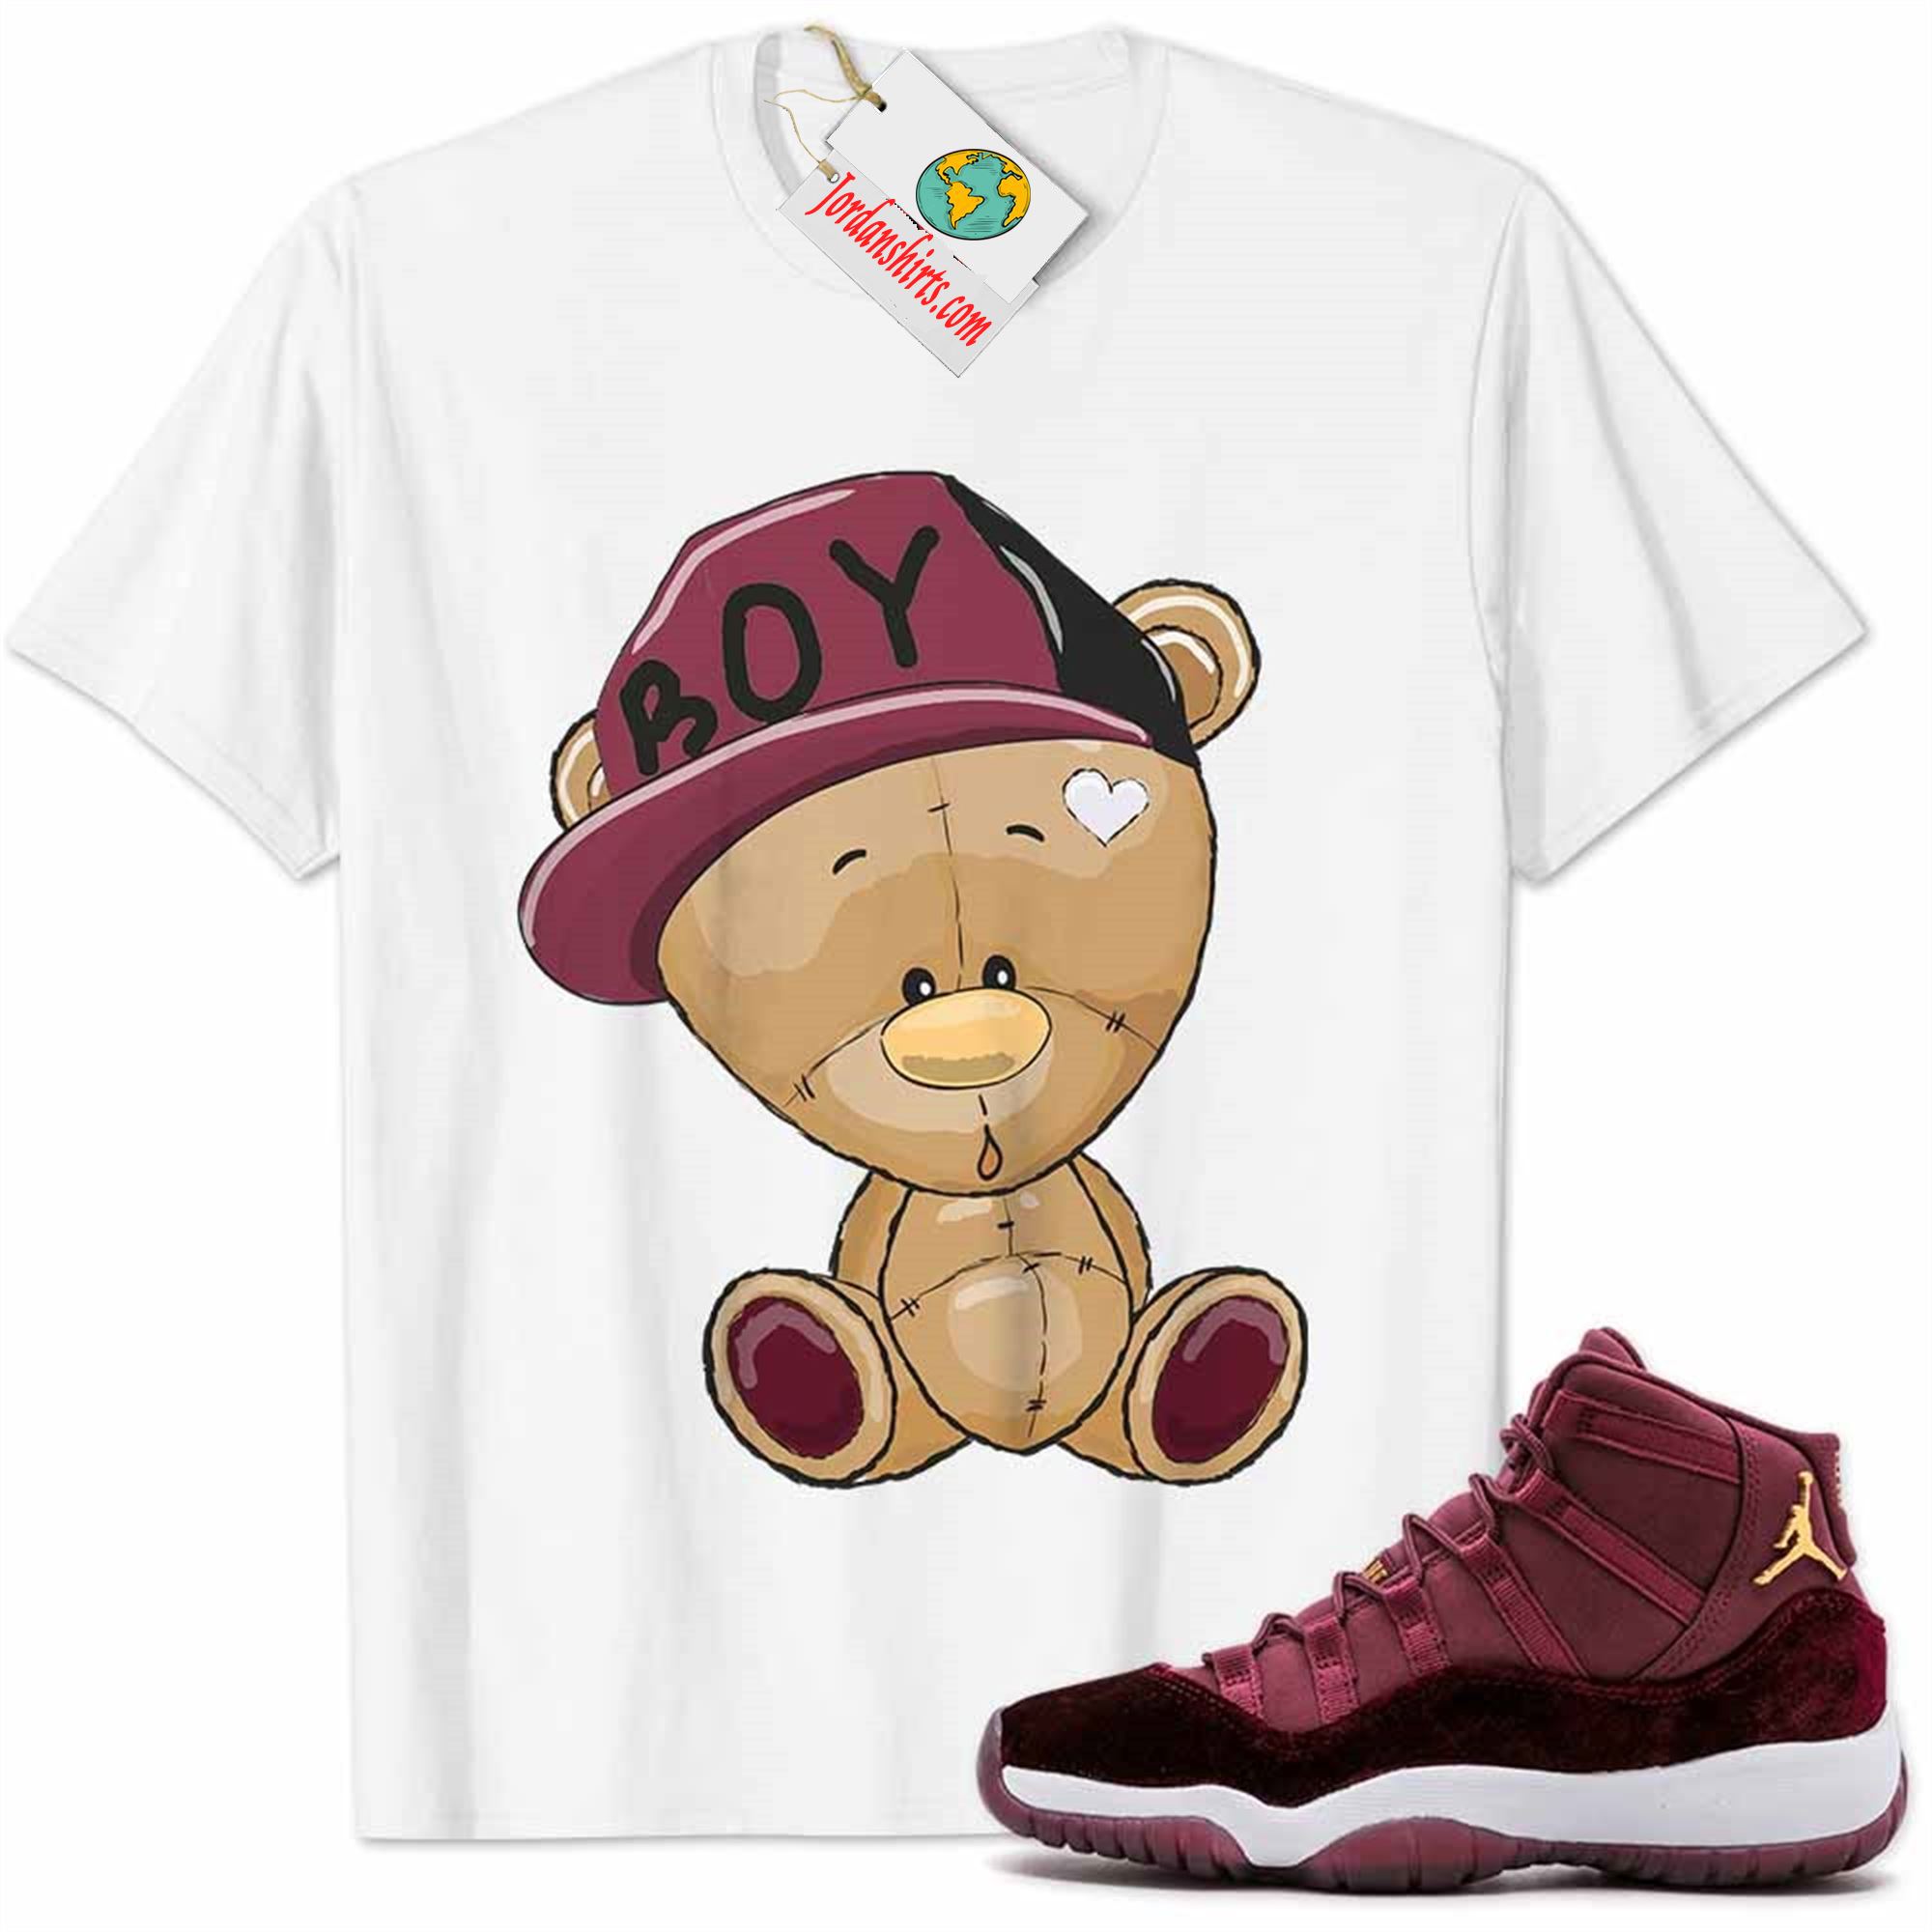 Jordan 11 Shirt, Jordan 11 Velvet Shirt Cute Baby Teddy Bear White Size Up To 5xl